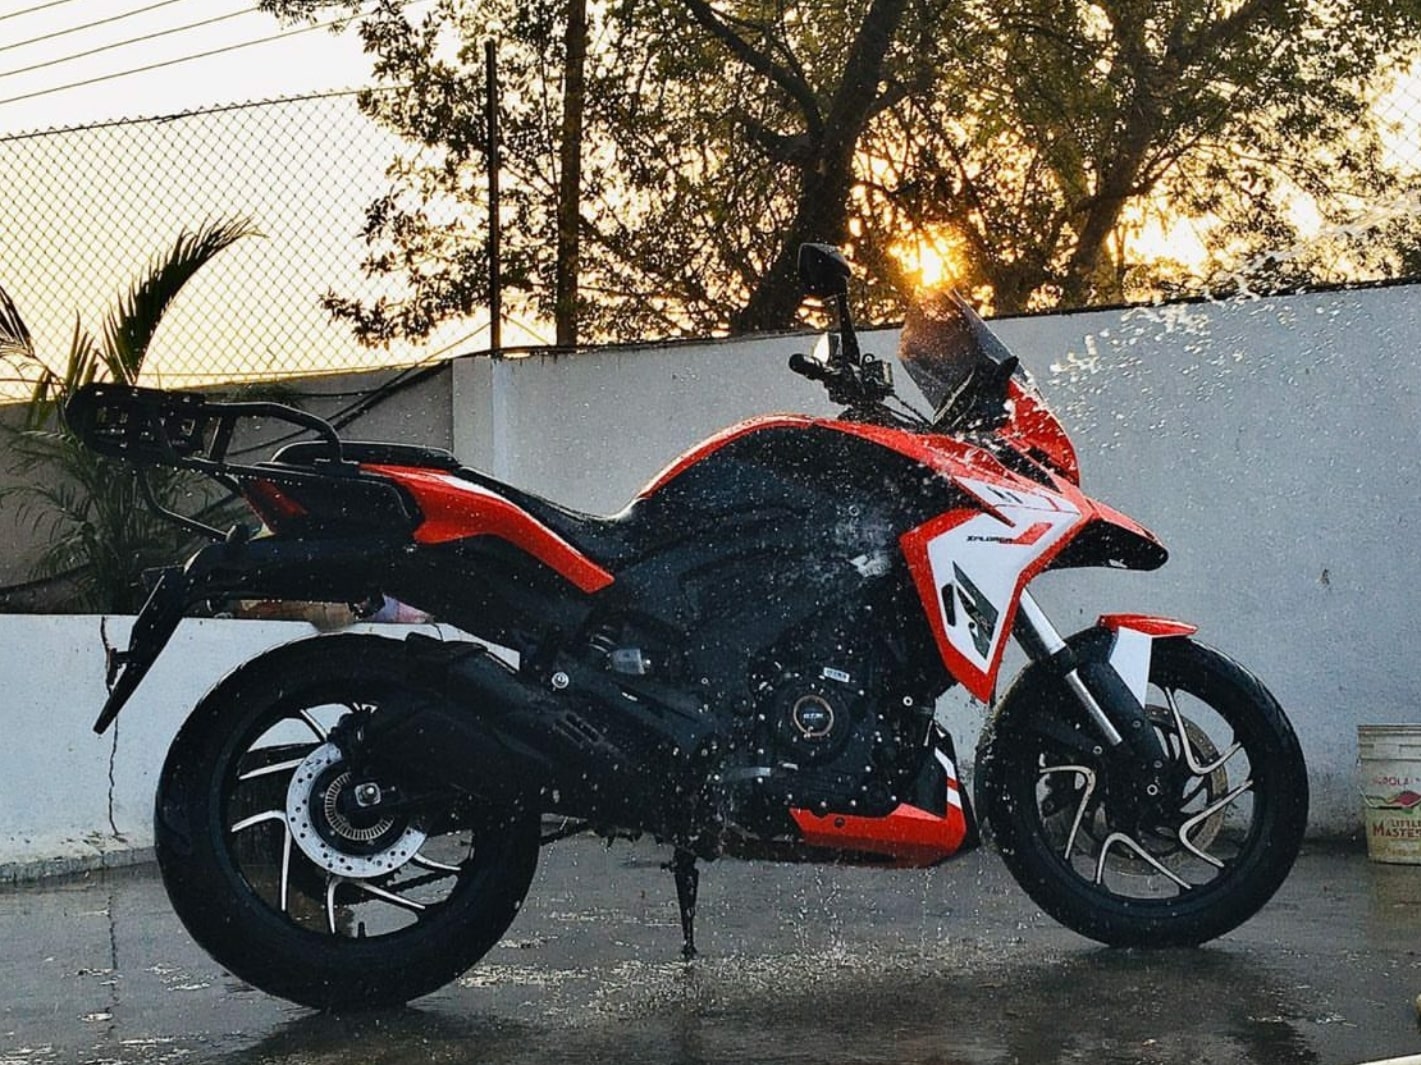 Bajaj Xplorer 400 Adventure Motorcycle Looks Fantabulous! - snap